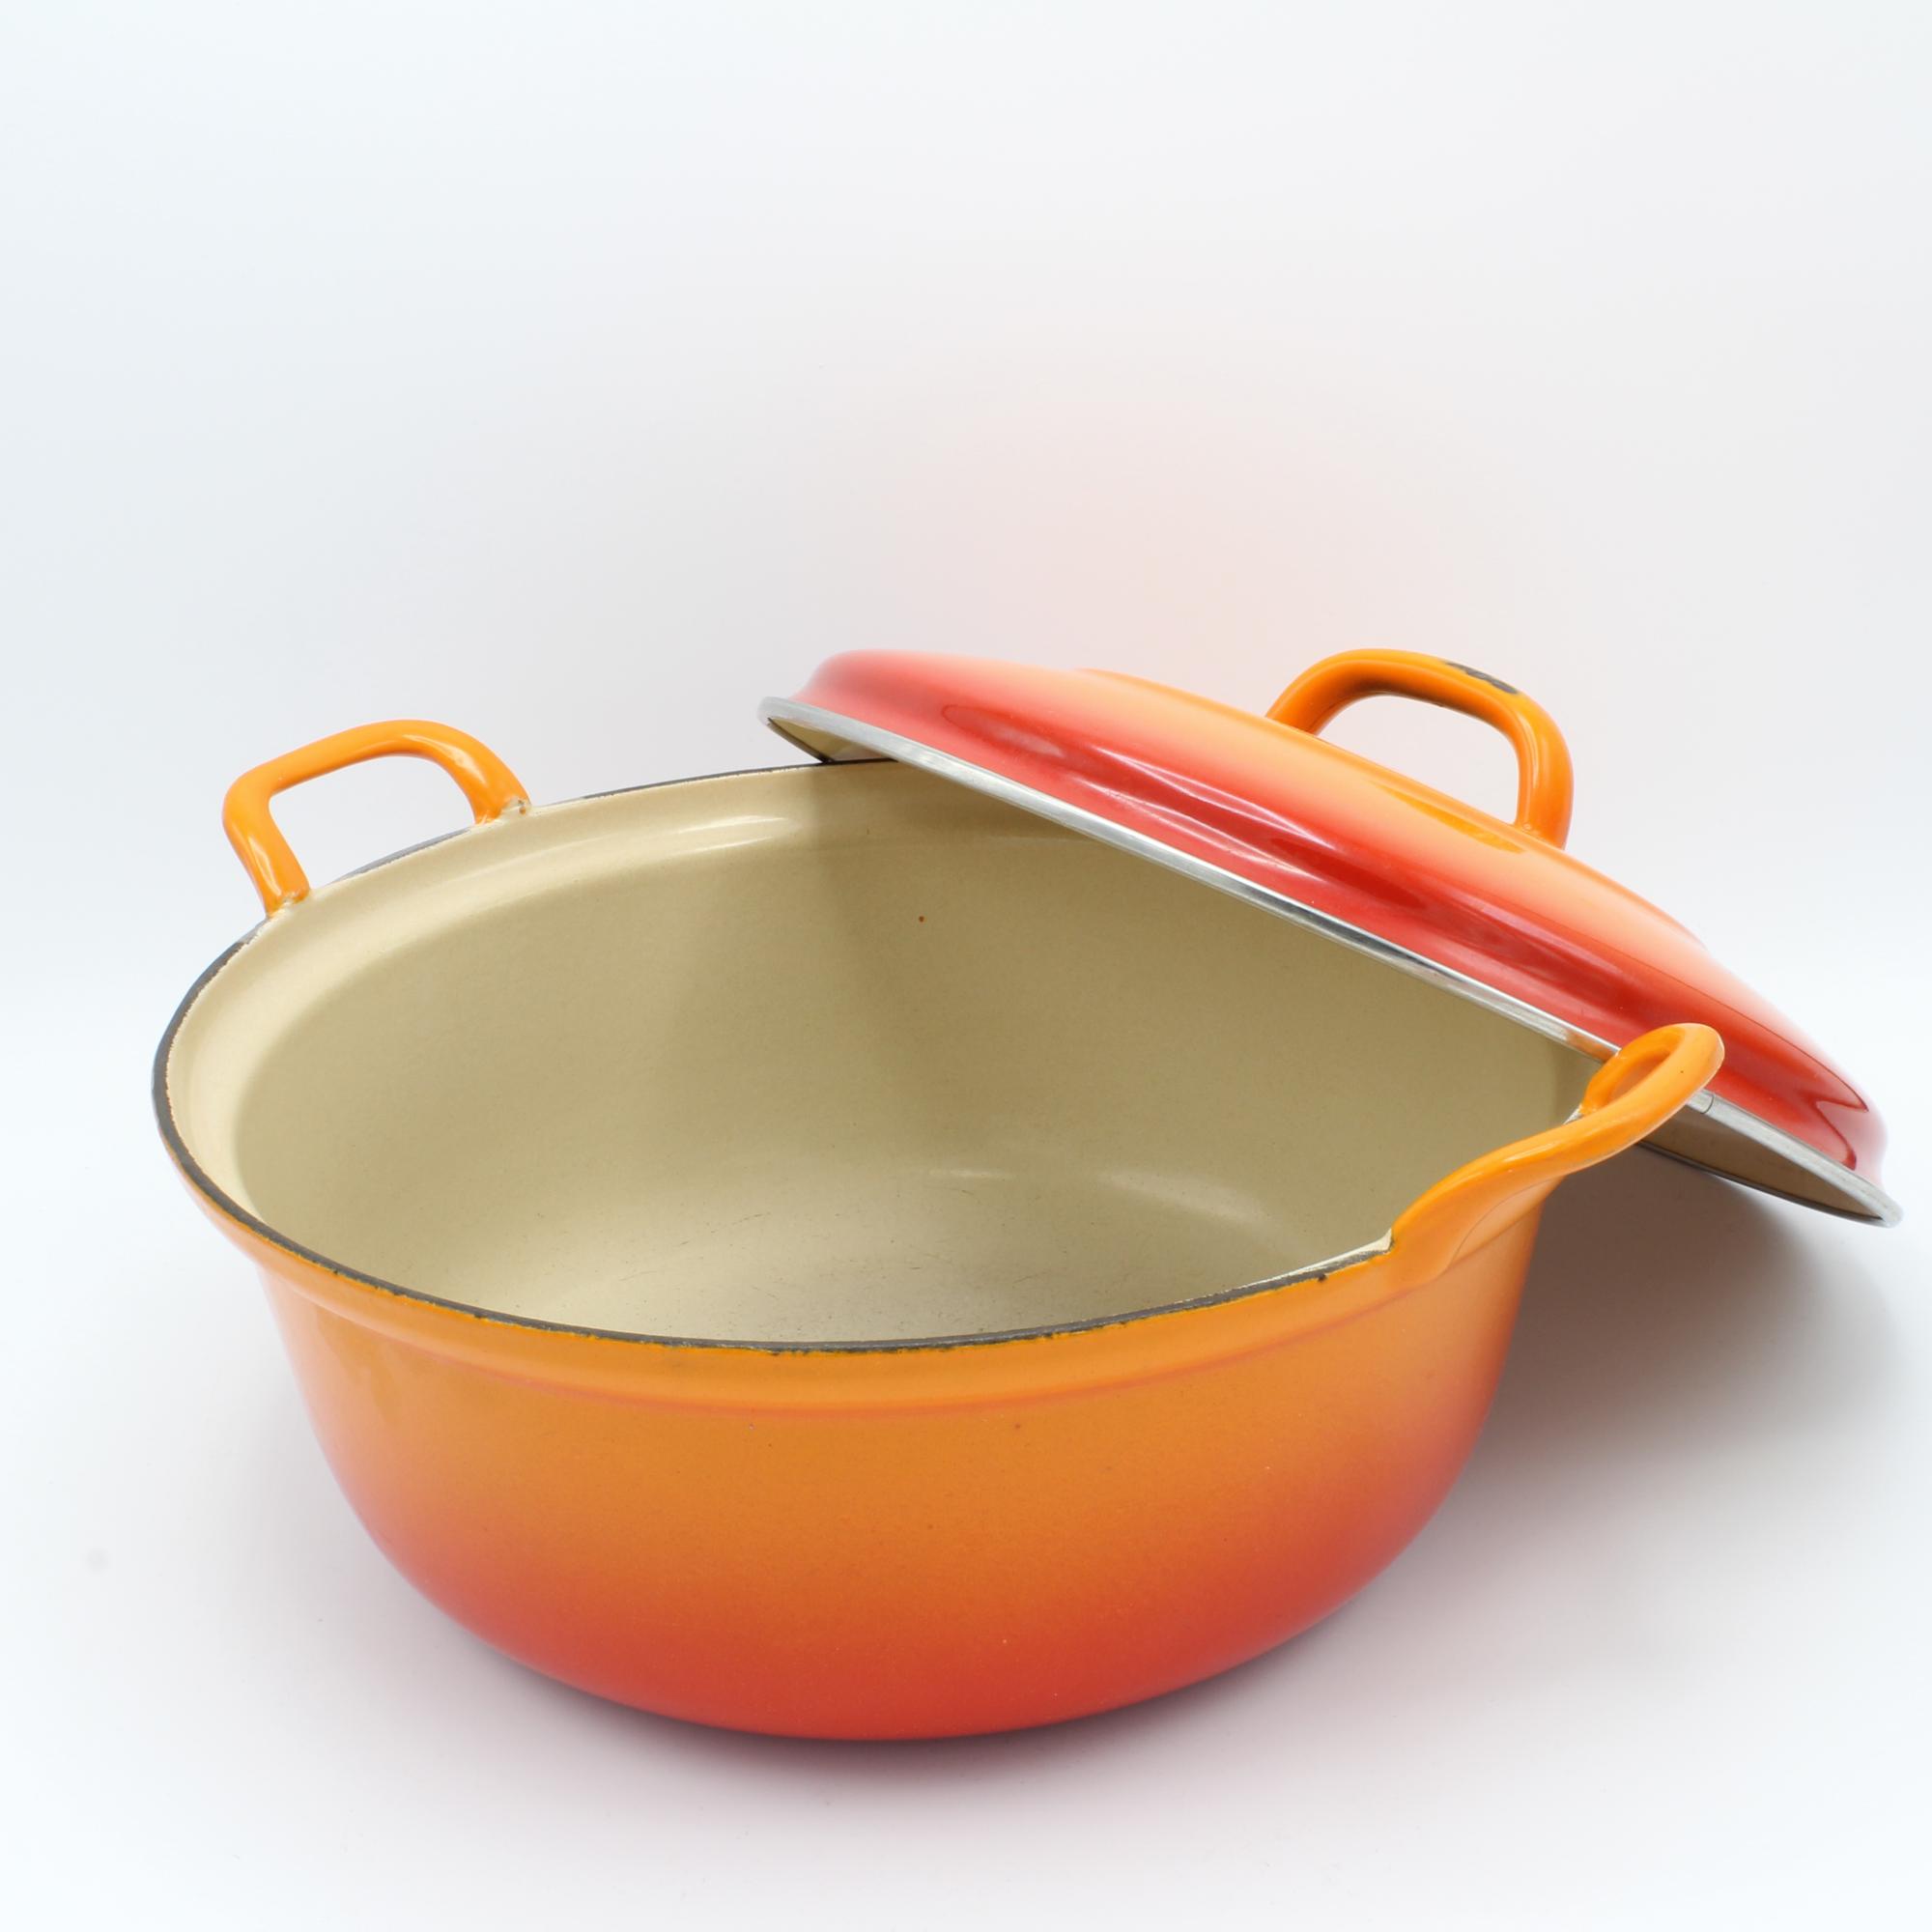 Aftrekken Sada Prematuur Braadpan, oranjerood 28 cm • Gaer Cookware